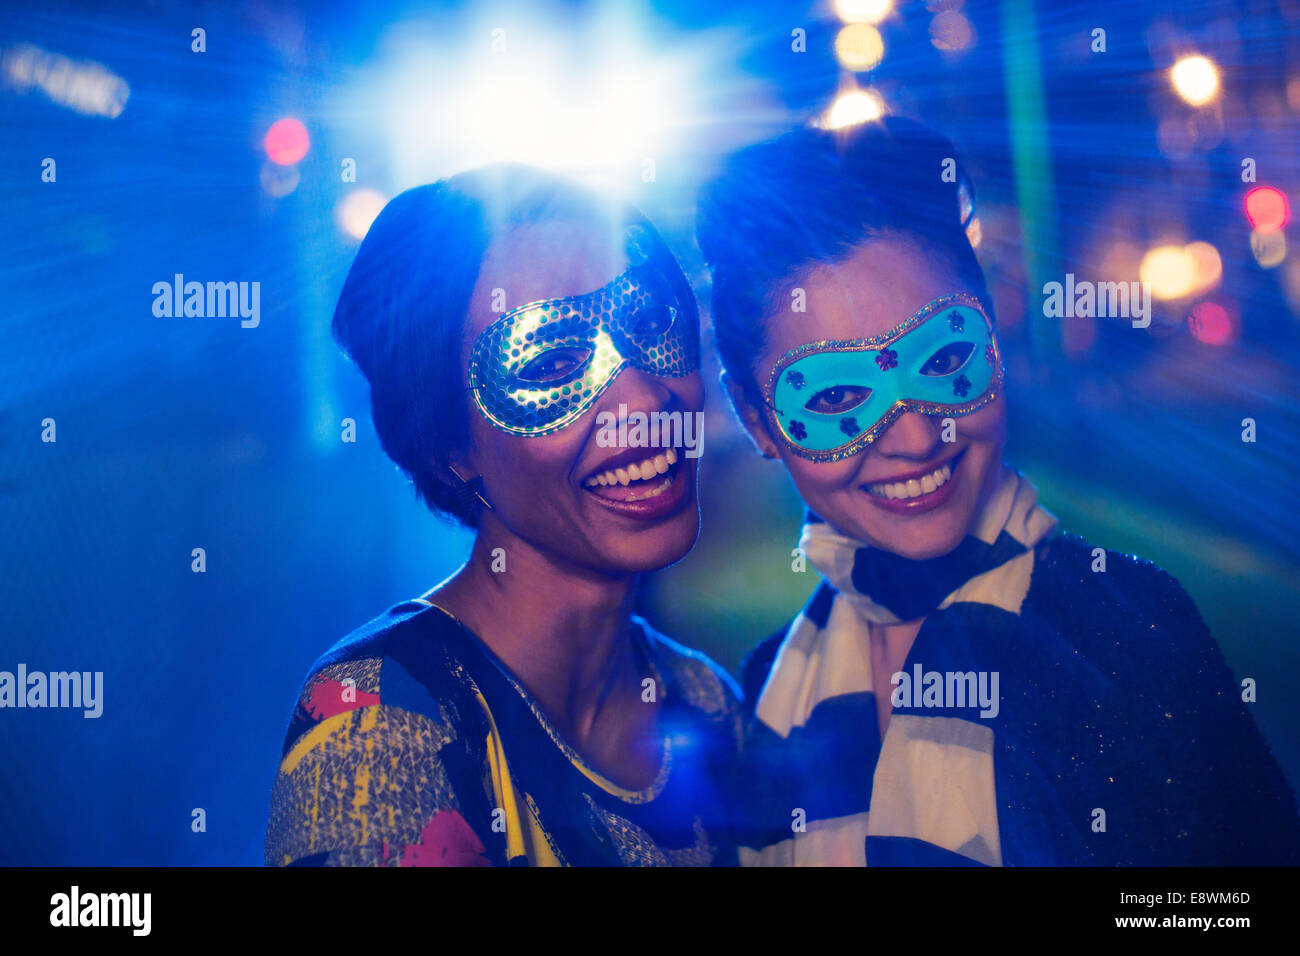 Les femmes dans les masques smiling together Banque D'Images